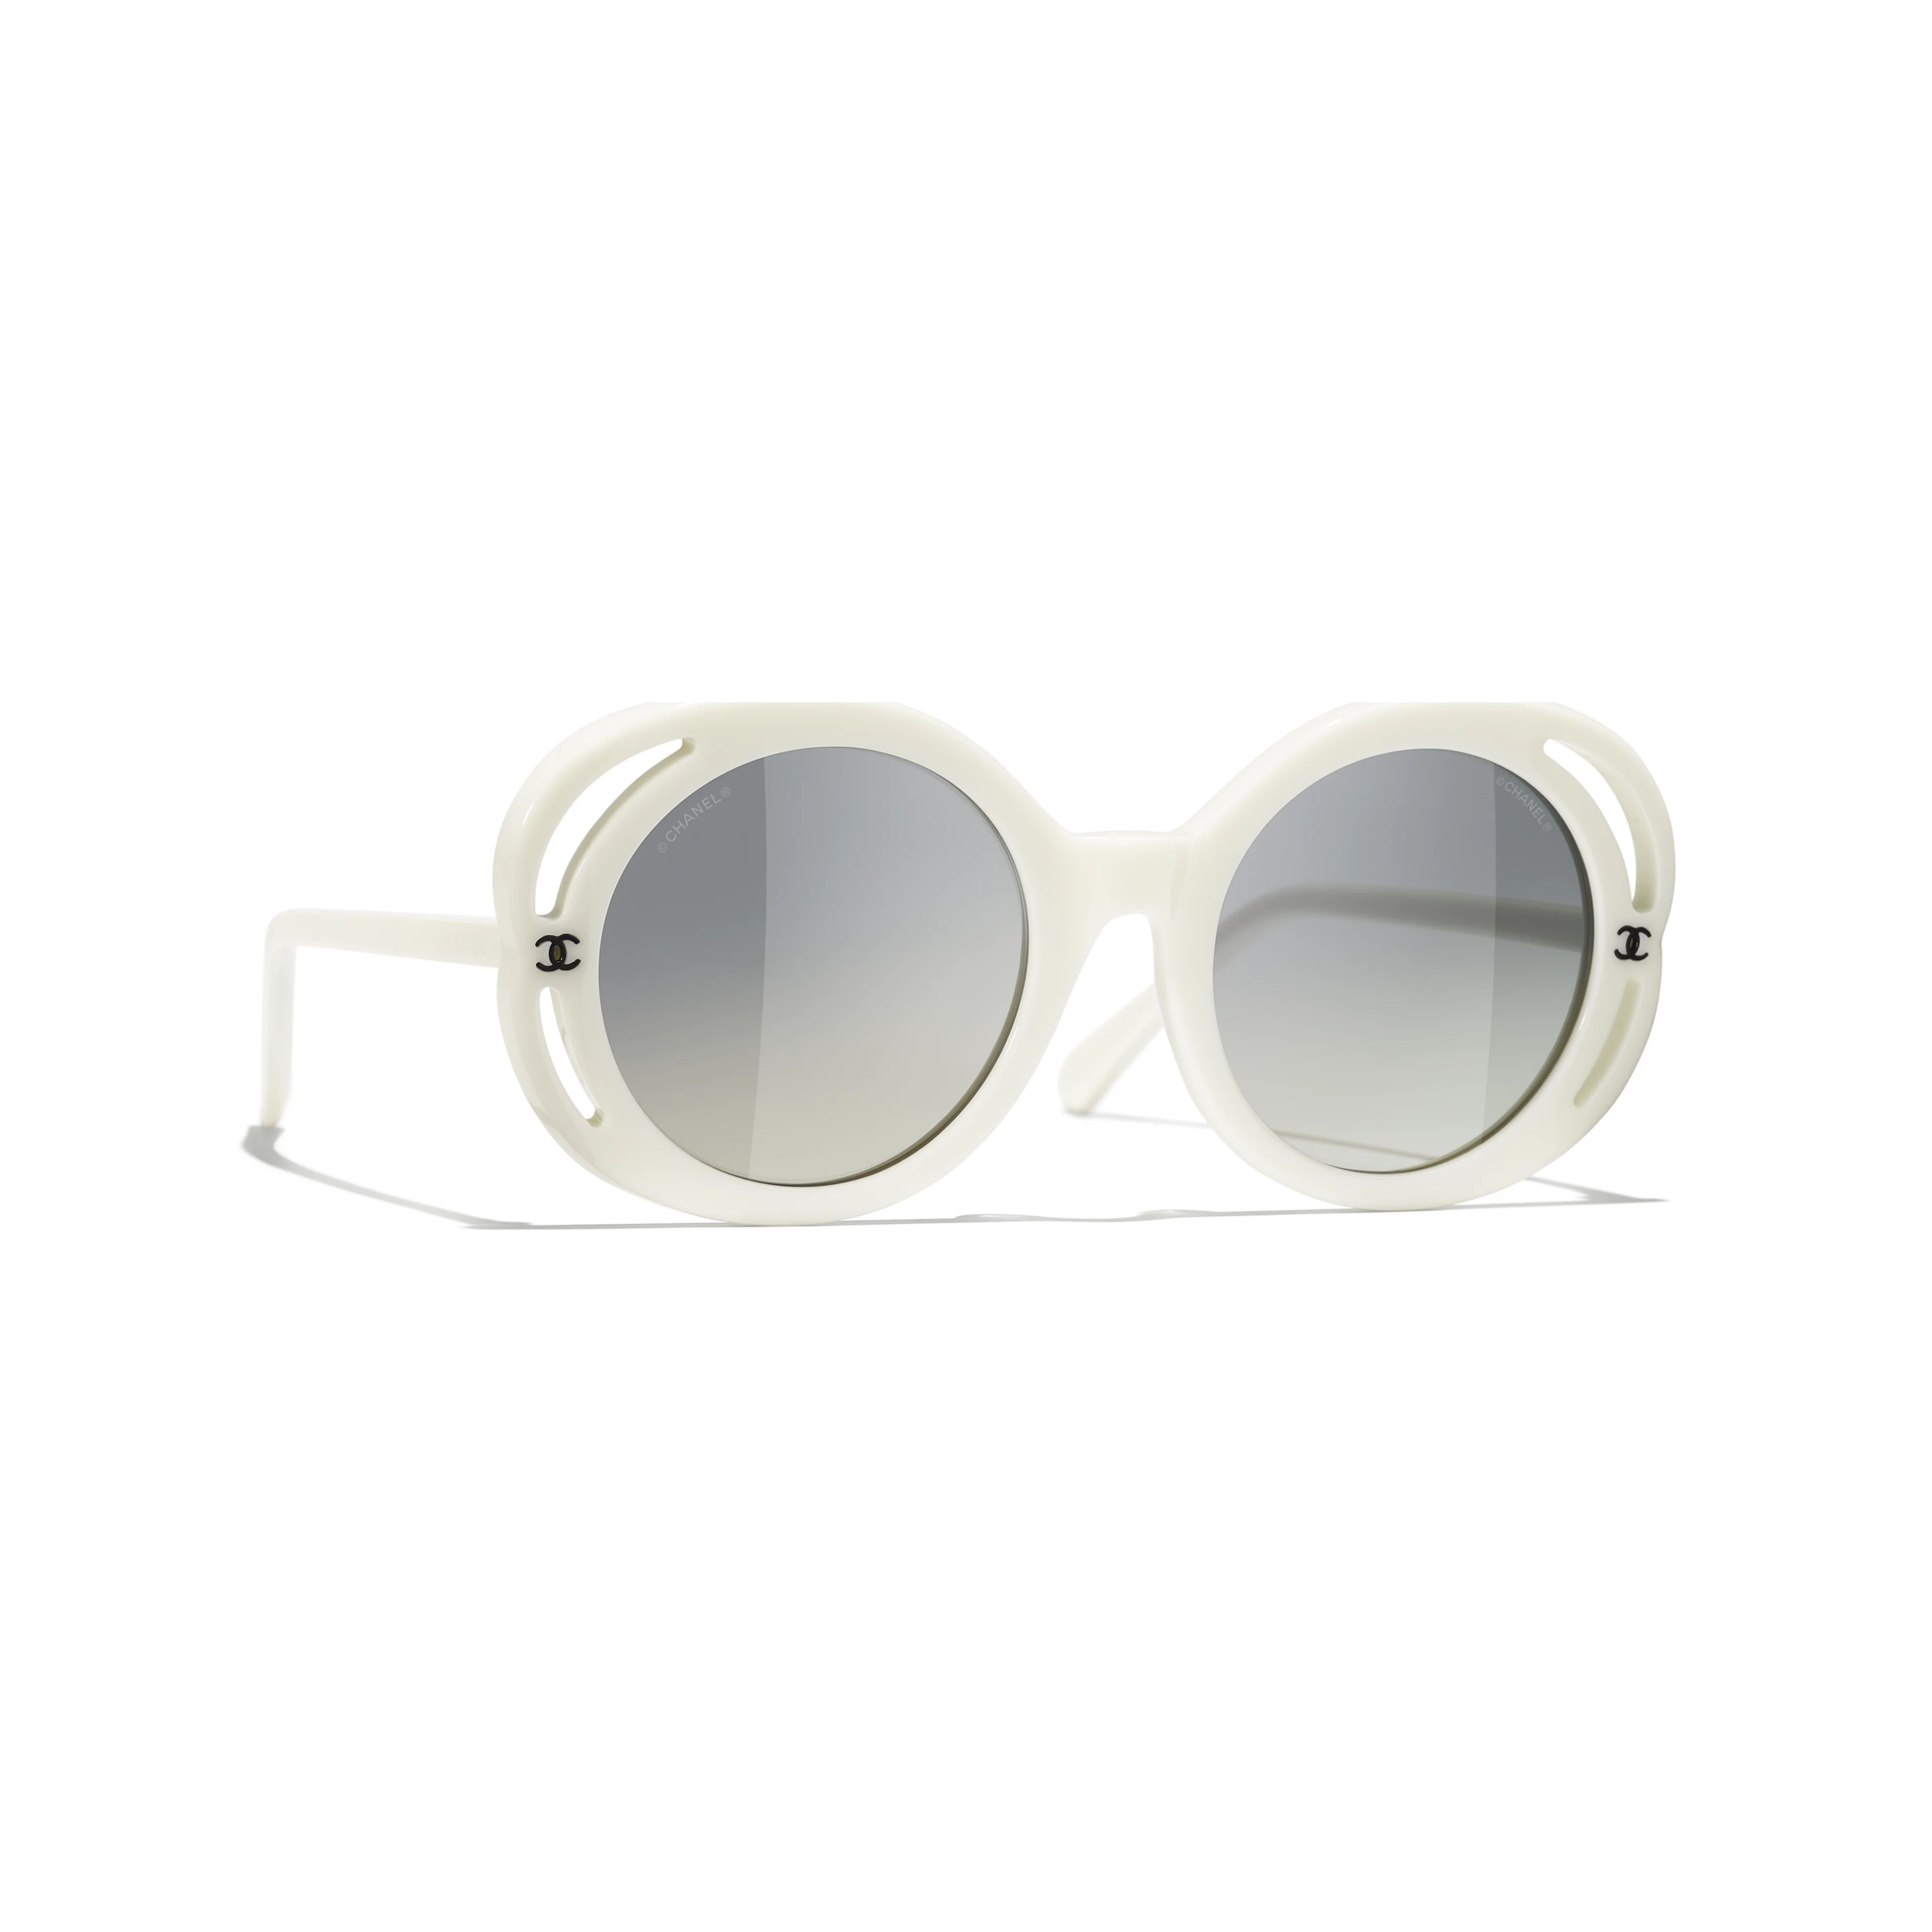 Sunglasses: Round Sunglasses, acetate — Fashion | CHANEL | Chanel, Inc. (US)